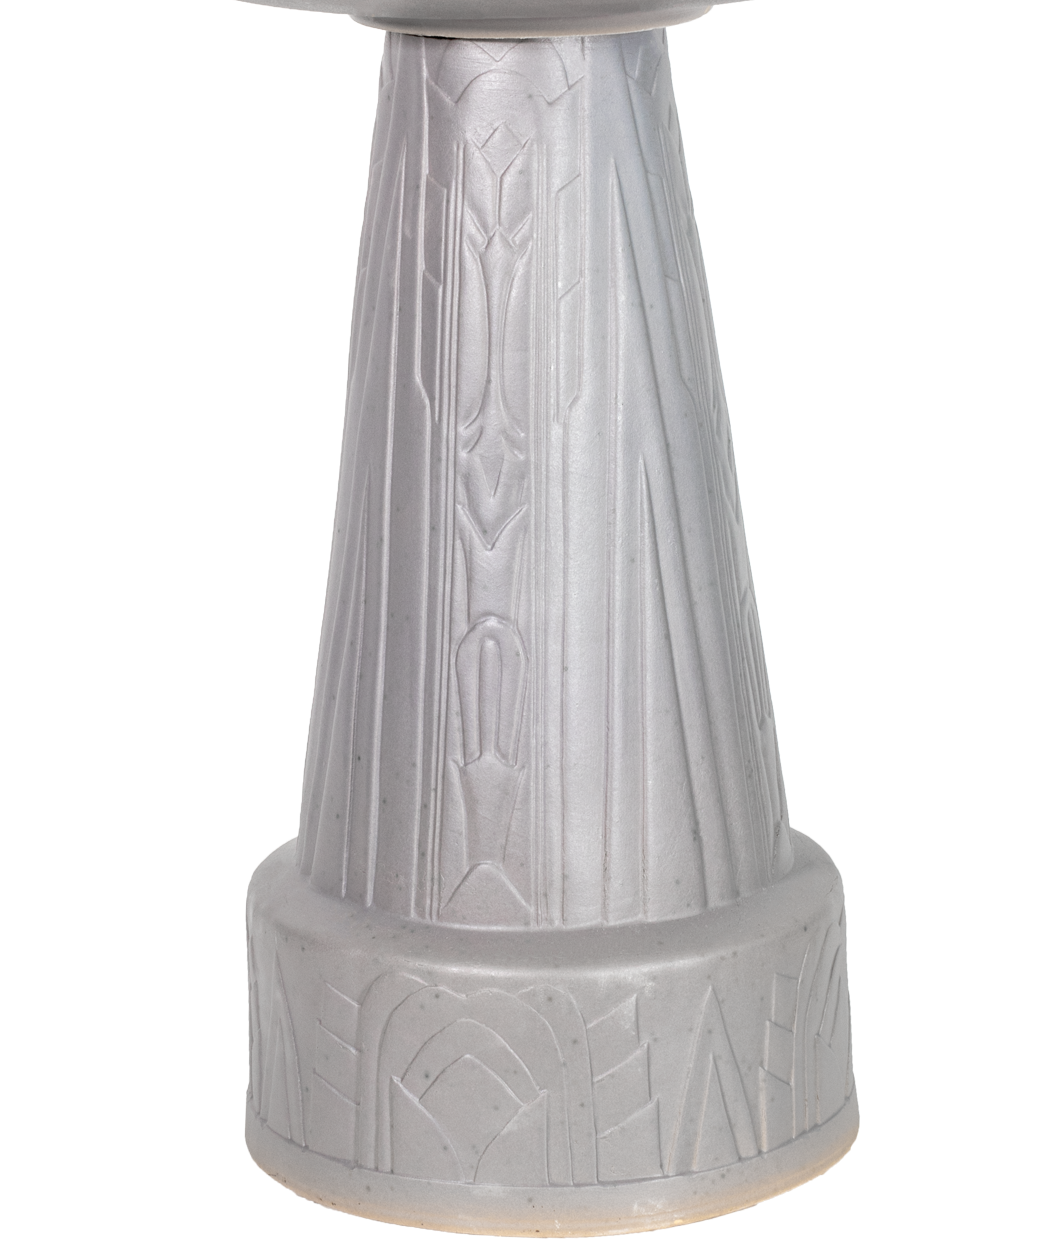 ceramic gray birdbath pedestal with deco style design